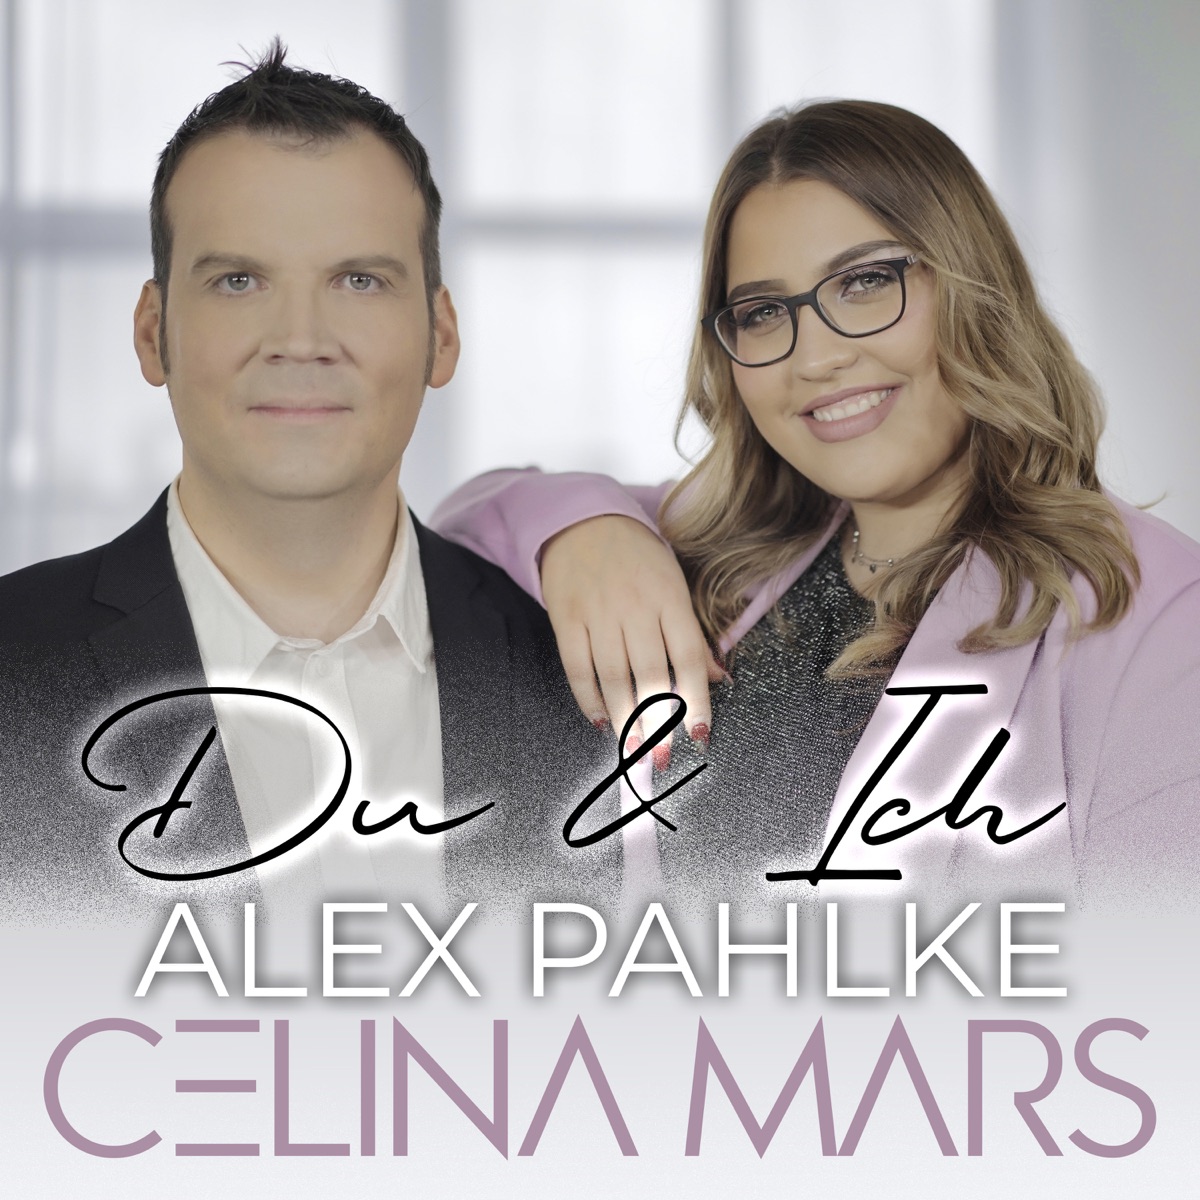 Alex Pahlke & Celina Mars - Du & ich 